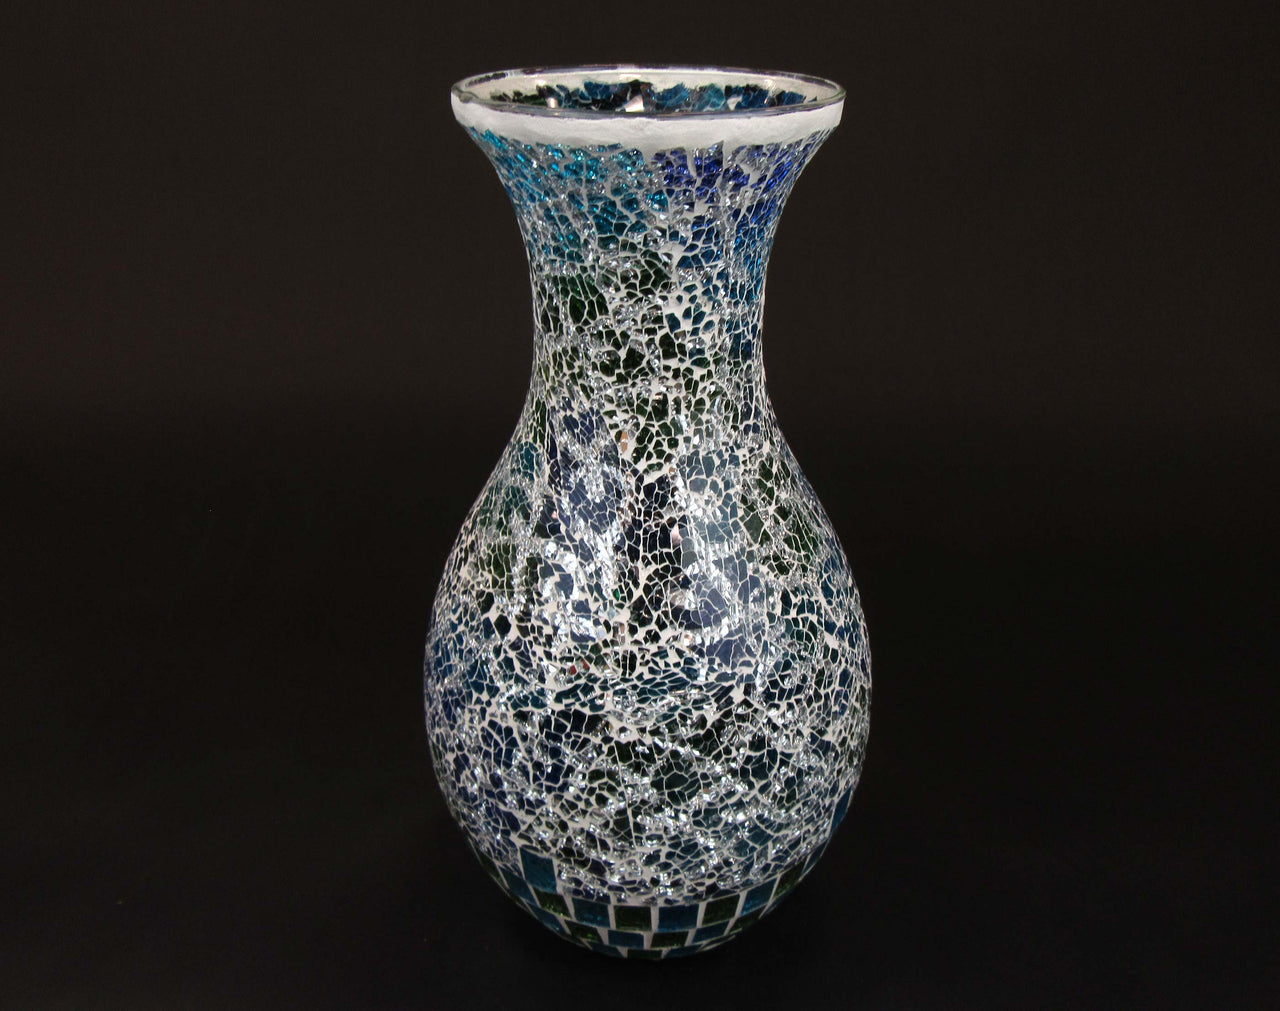 HCHD5774 - Green Glass Ball Vase